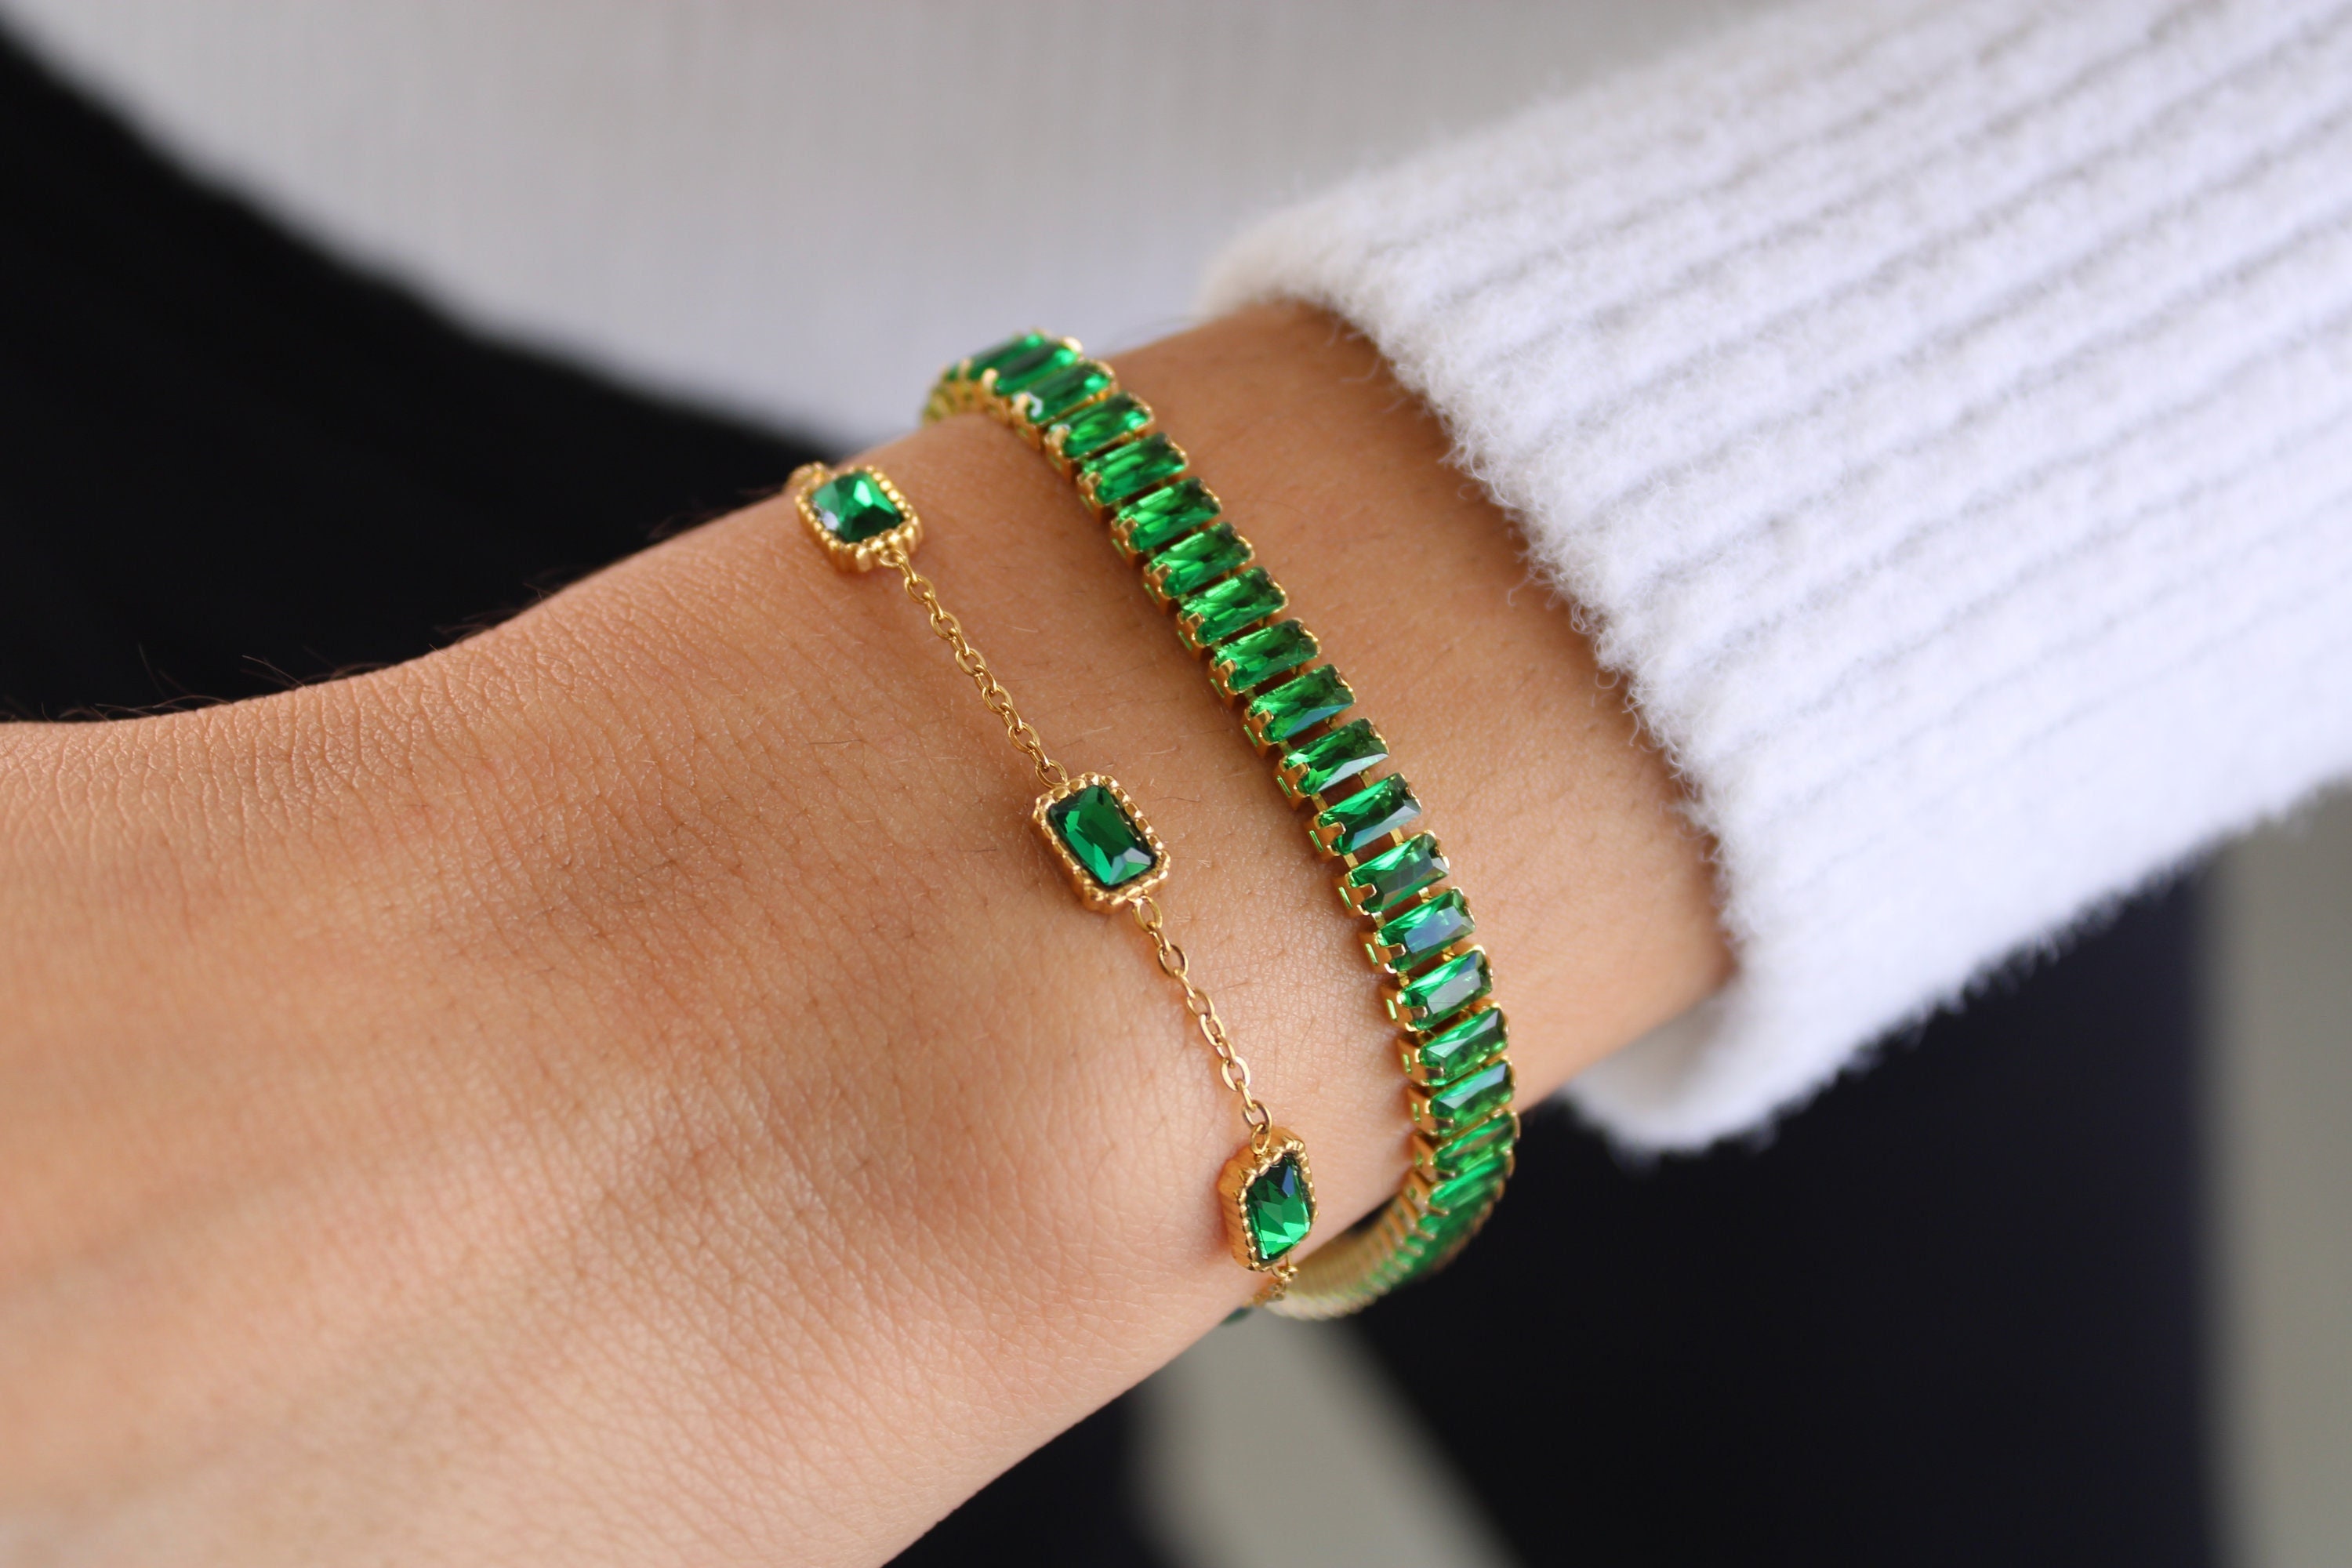 YELLOW GOLD FINISH Created Diamond Round Cut Swirl Green Emerald Bracelet  Including Gift Box - Jewellery Online Store